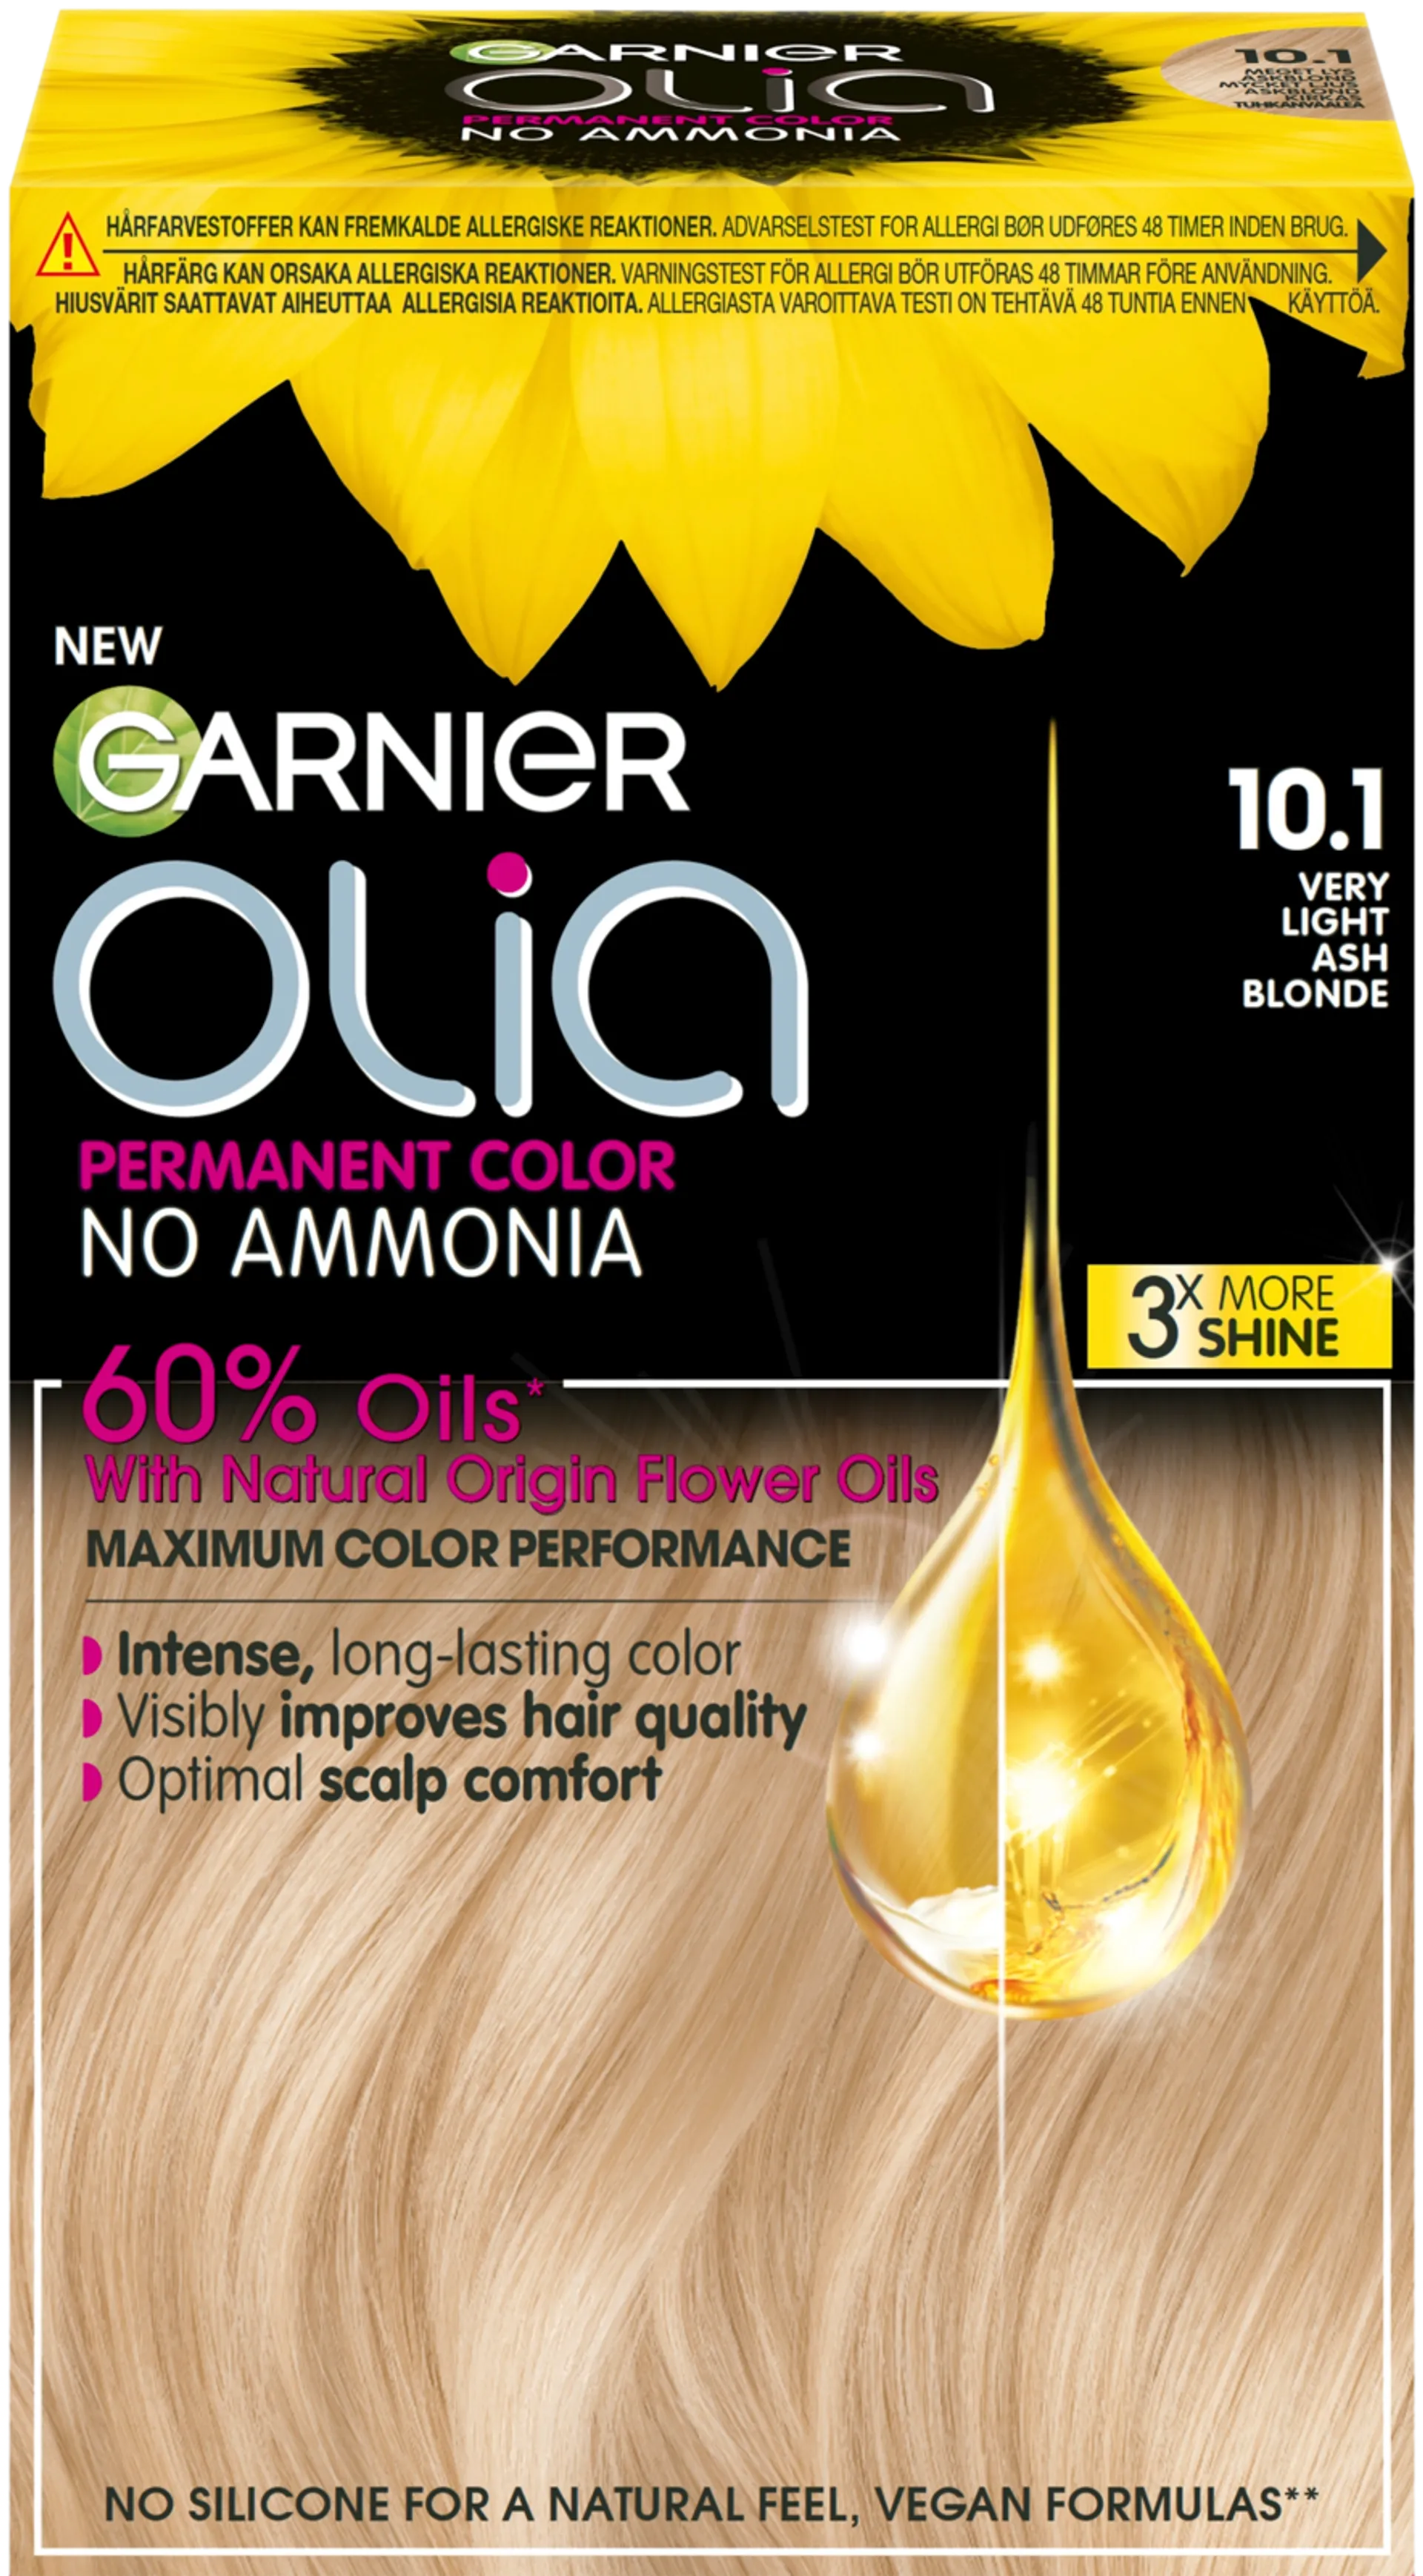 Garnier Olia 10.1 Very Light Ash Blonde kestoväri 174ml - 1